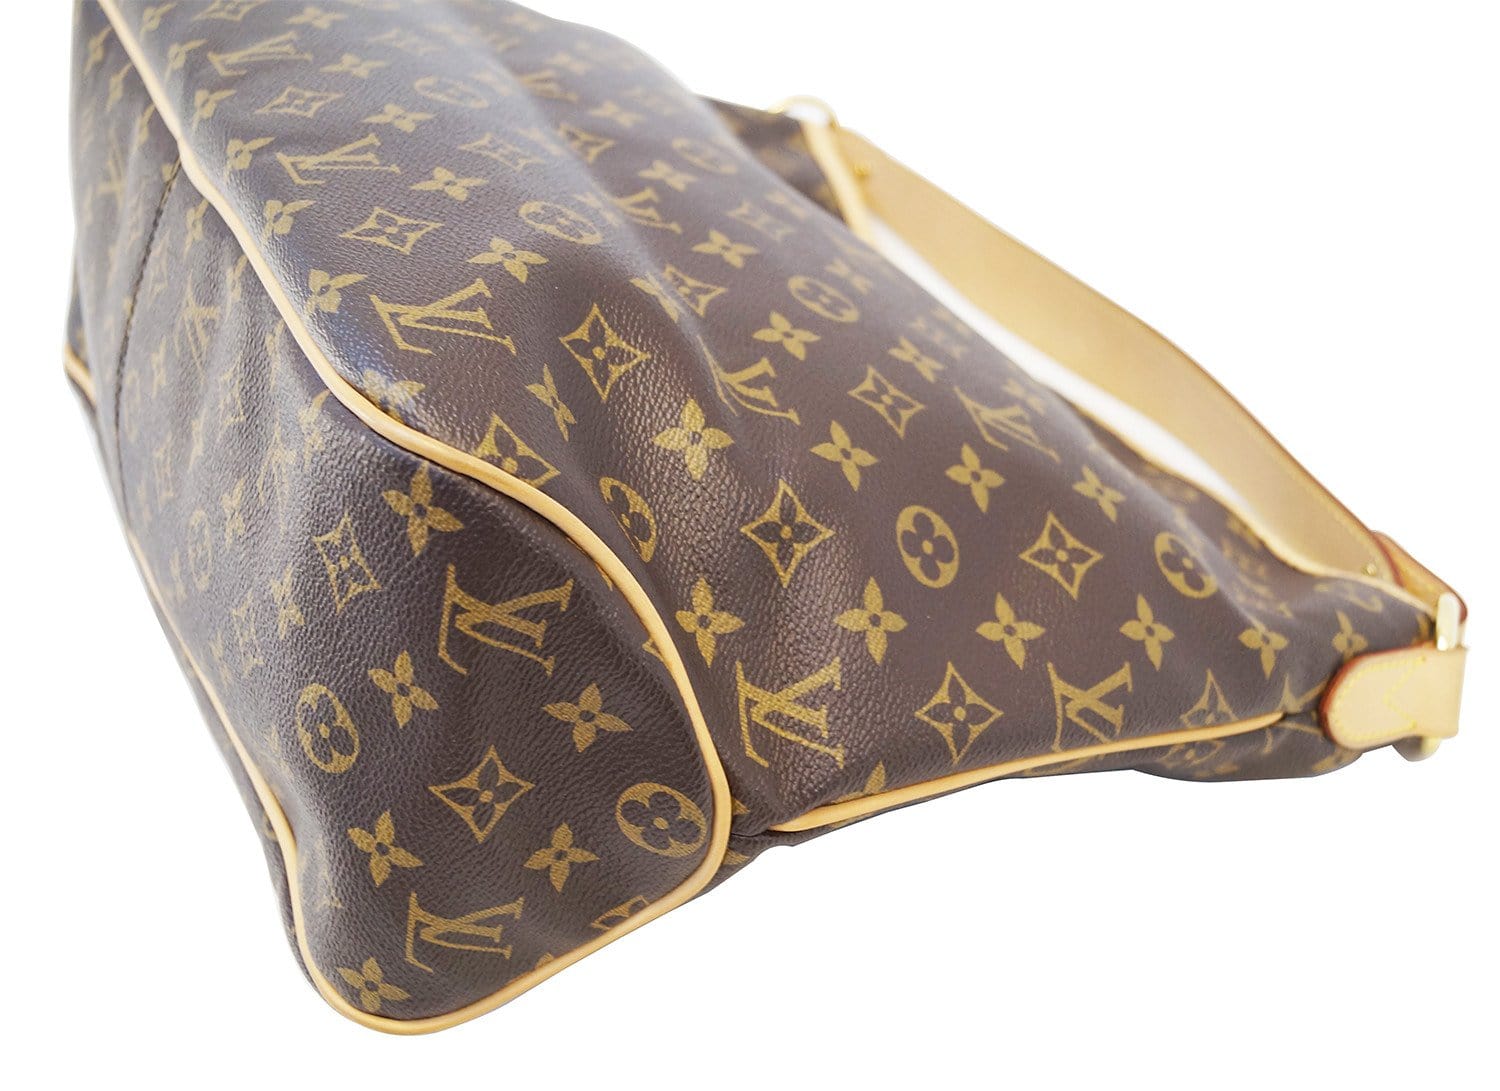 Pre-Owned Louis Vuitton Favorite Monogram MM Crossbody Bag - Good Condition  